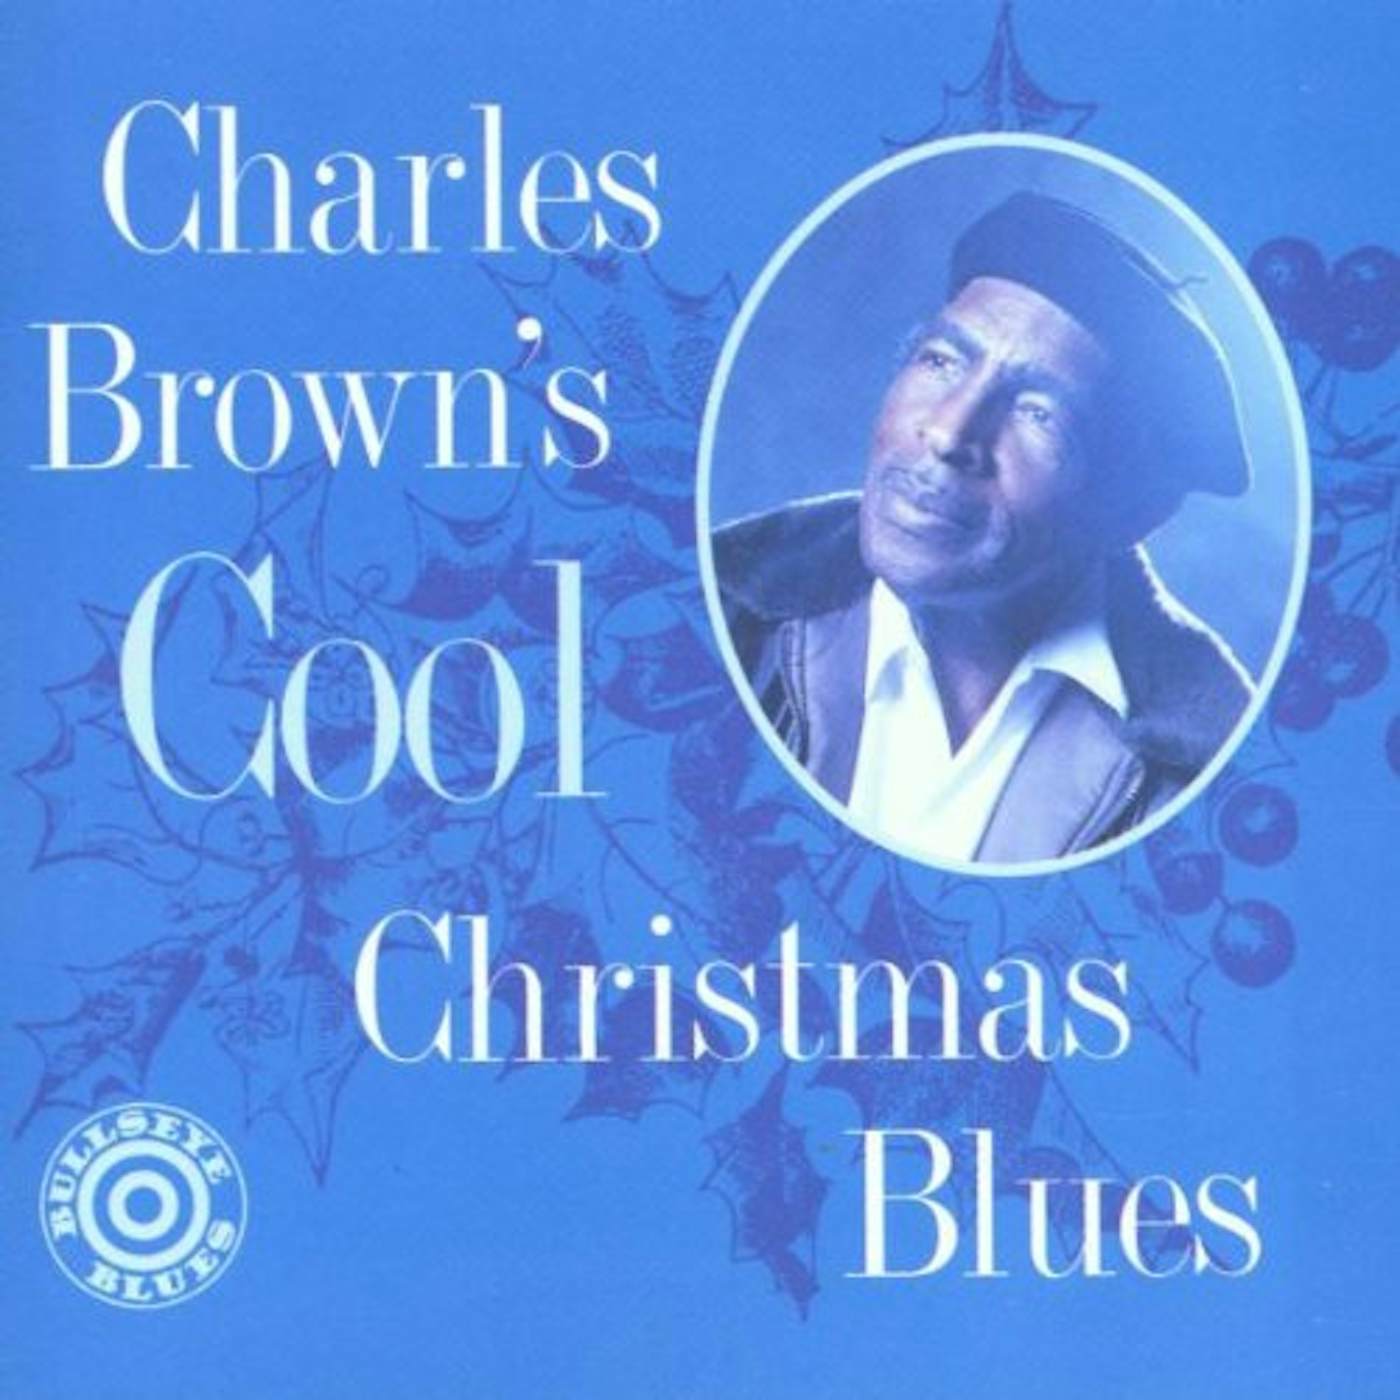 Charles Browns Cool Christmas Blues Vinyl Record